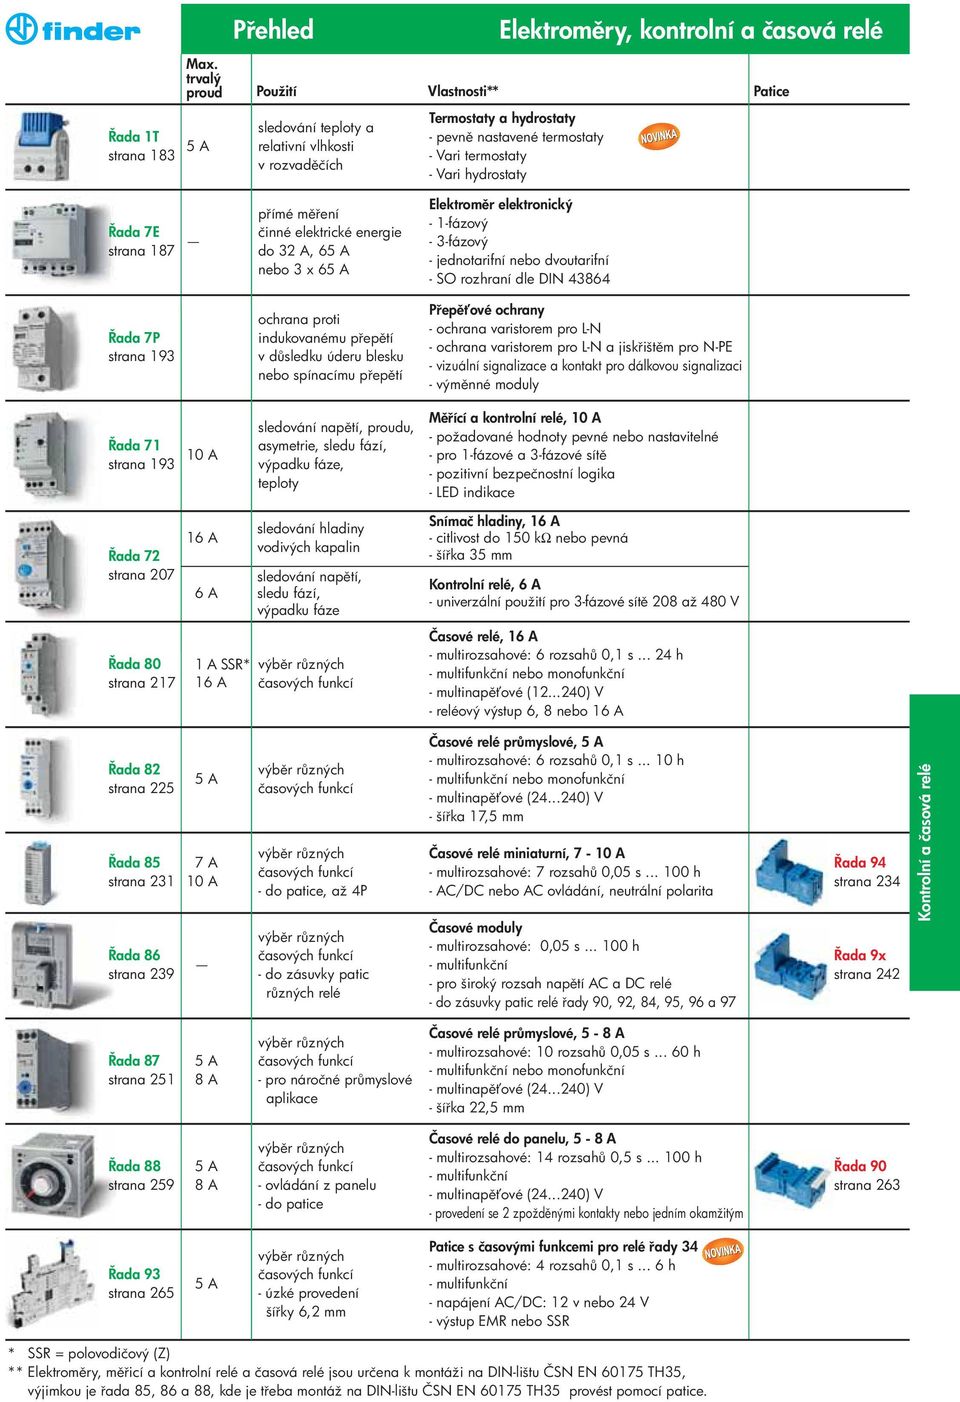 termostaty - Vari hydrostaty Patice ada 7E strana 187 p ímé m ení činné elektrické energie do 32 A, 65 A nebo 3 x 65 A Elektrom r elektronický - 1-fázový - 3-fázový - jednotarifní nebo dvoutarifní -